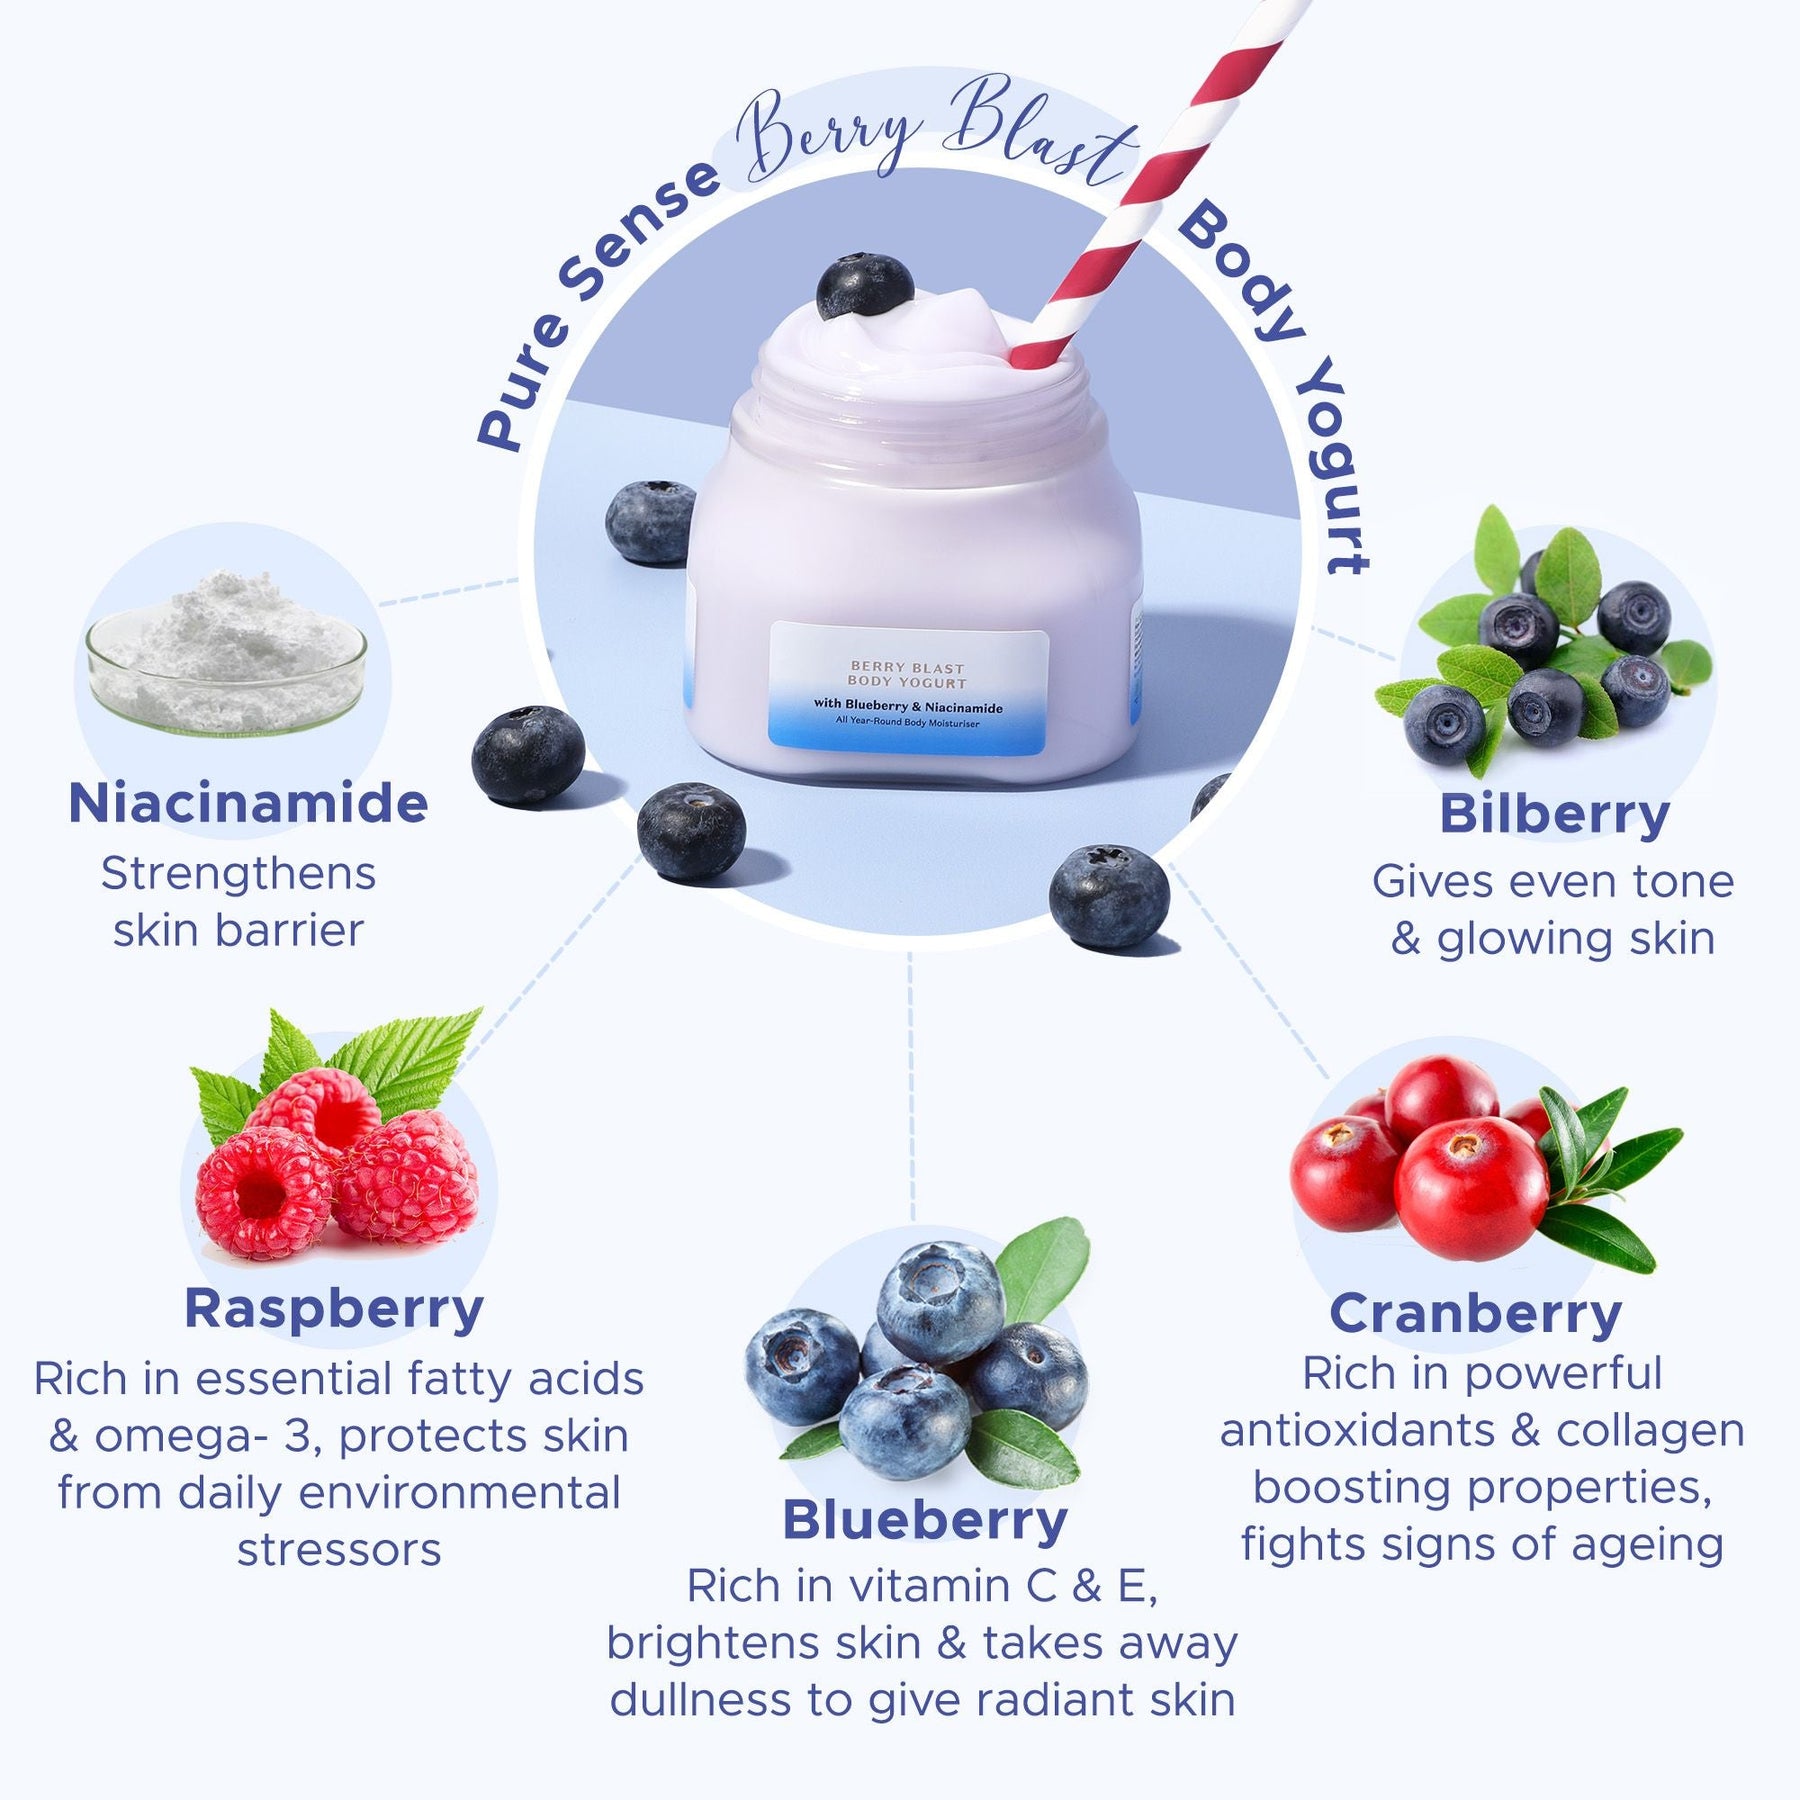 [CRED] Berry Blast Body Yogurt | From the makers of Parachute Advansed | 160ml